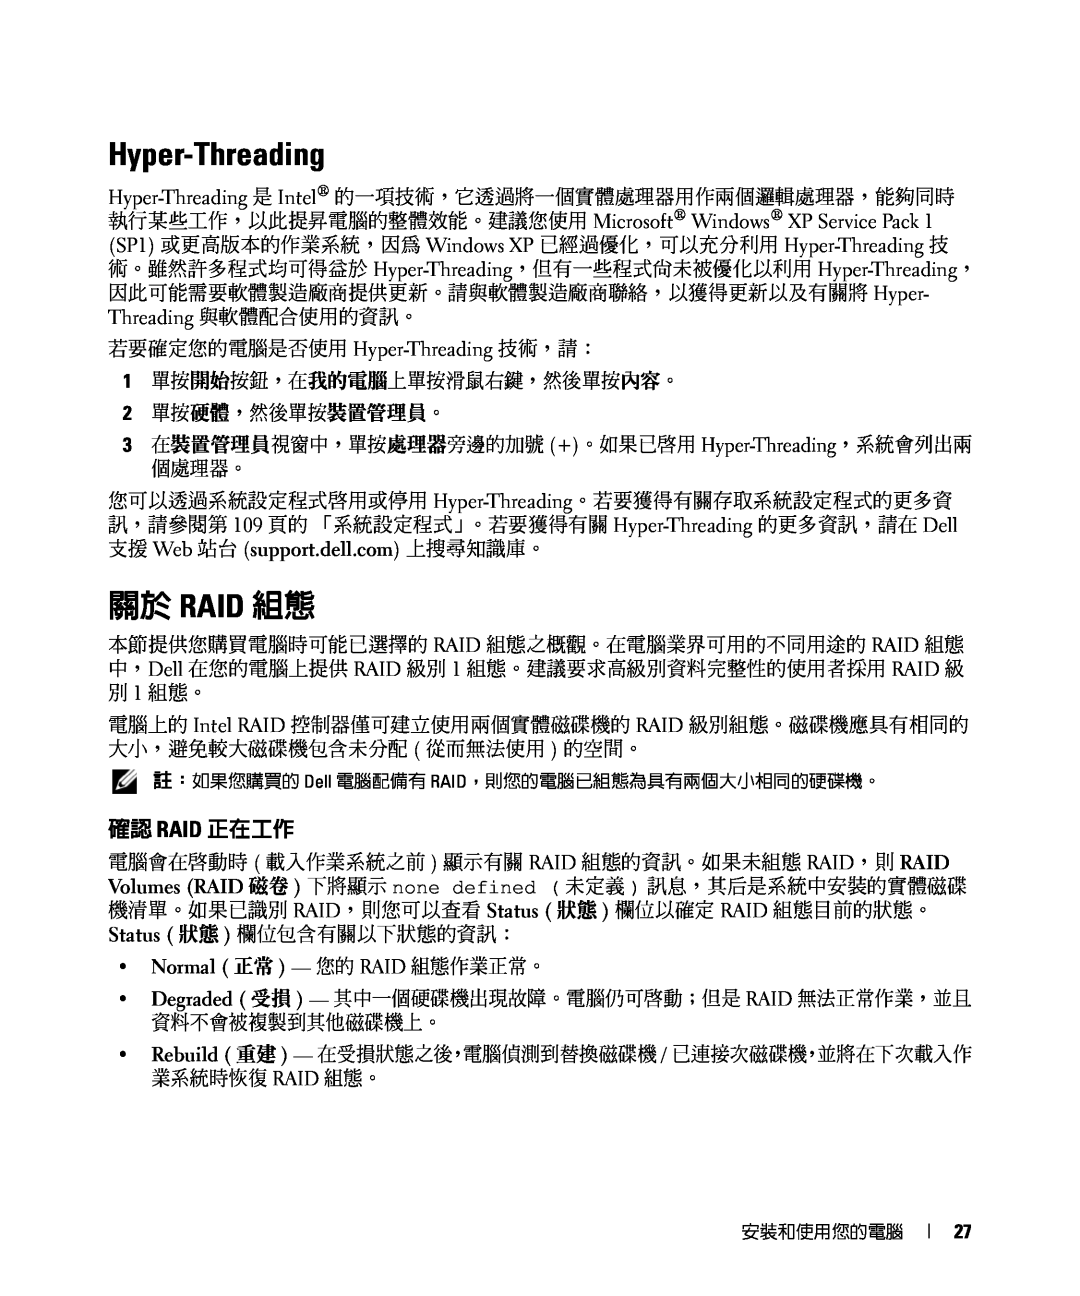 Dell E520 manual Hyper-Threading, 關於 Raid 組態, 確認 Raid 正在工作 